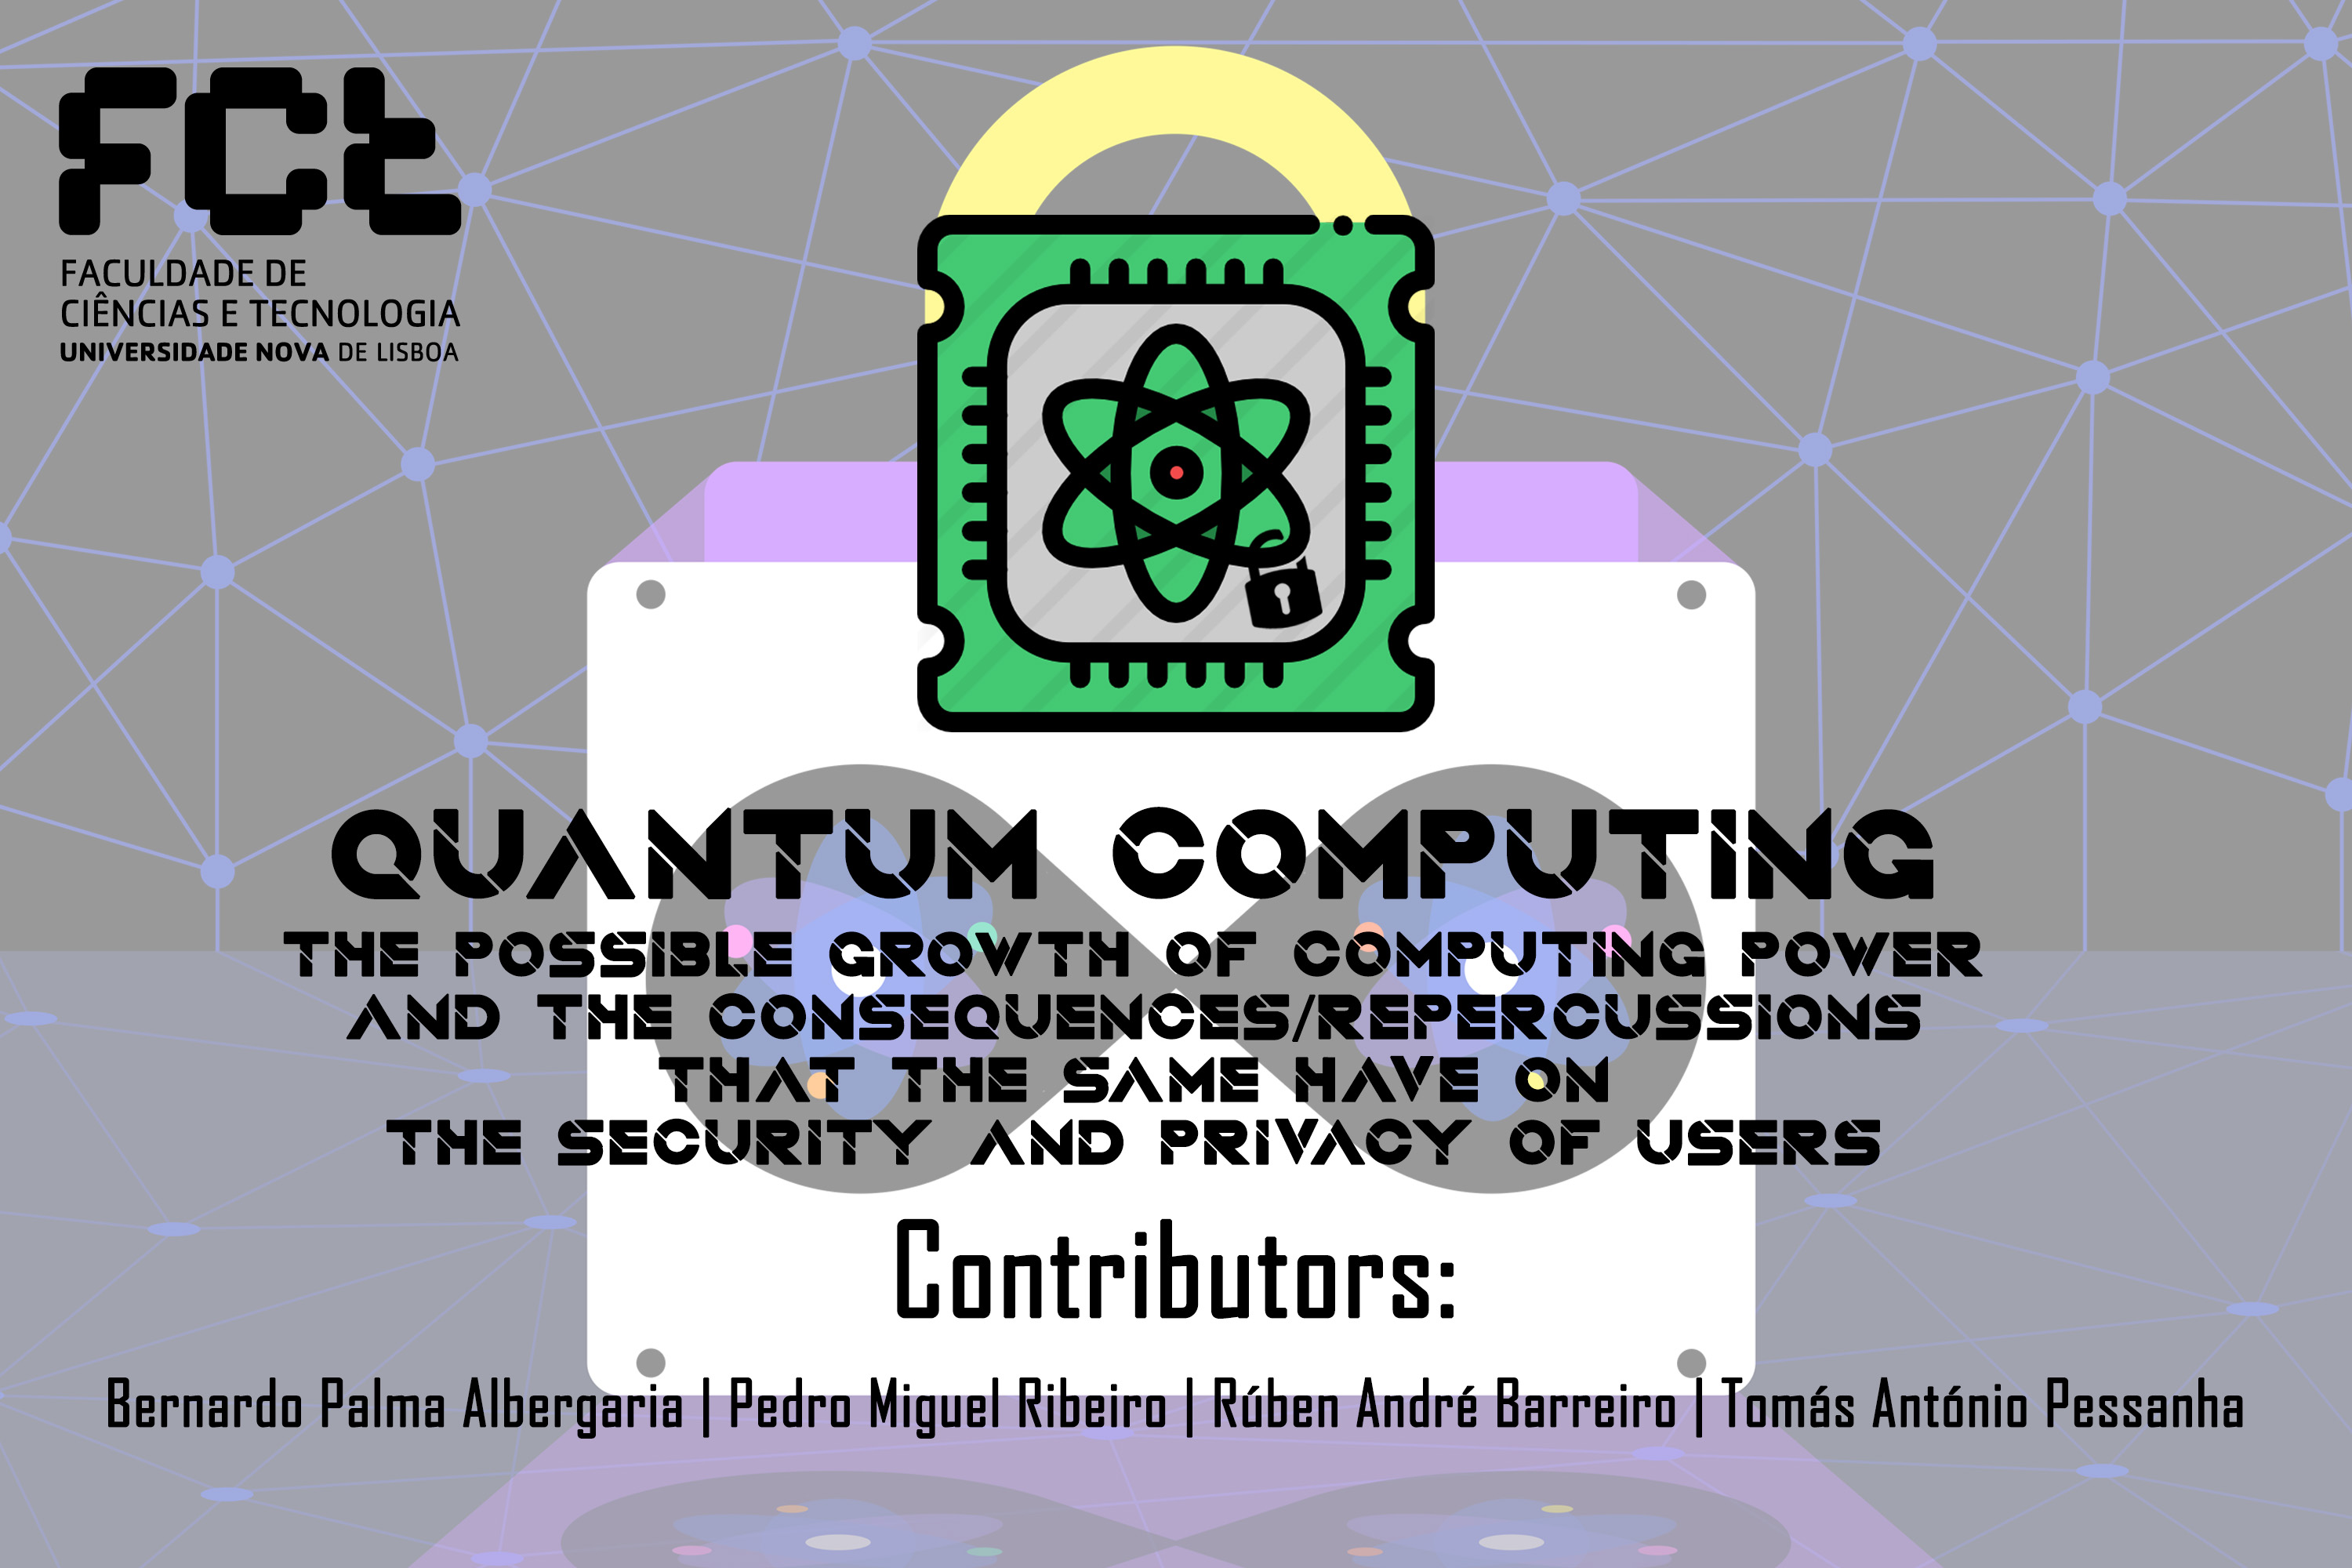 https://raw.githubusercontent.com/rubenandrebarreiro/quantum-computing-security-and-privacy-of-users/master/imgs/JPGs/banner-1.jpg